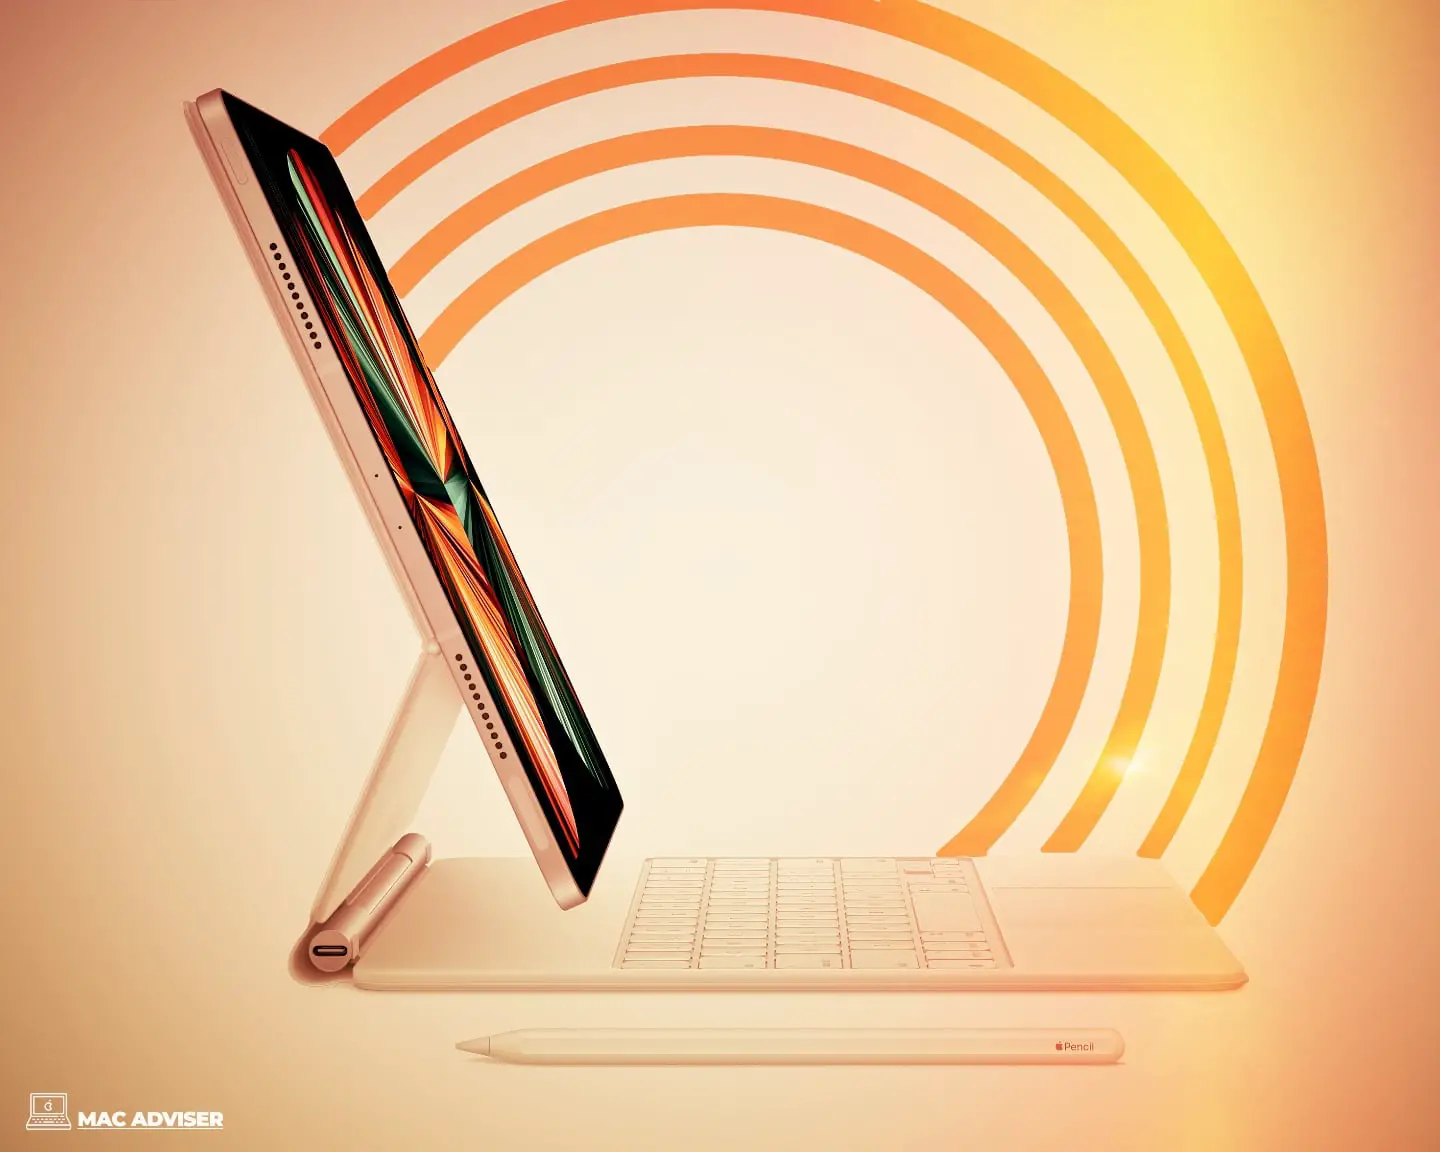 M1 iPad Pro Review Roundup | 2022